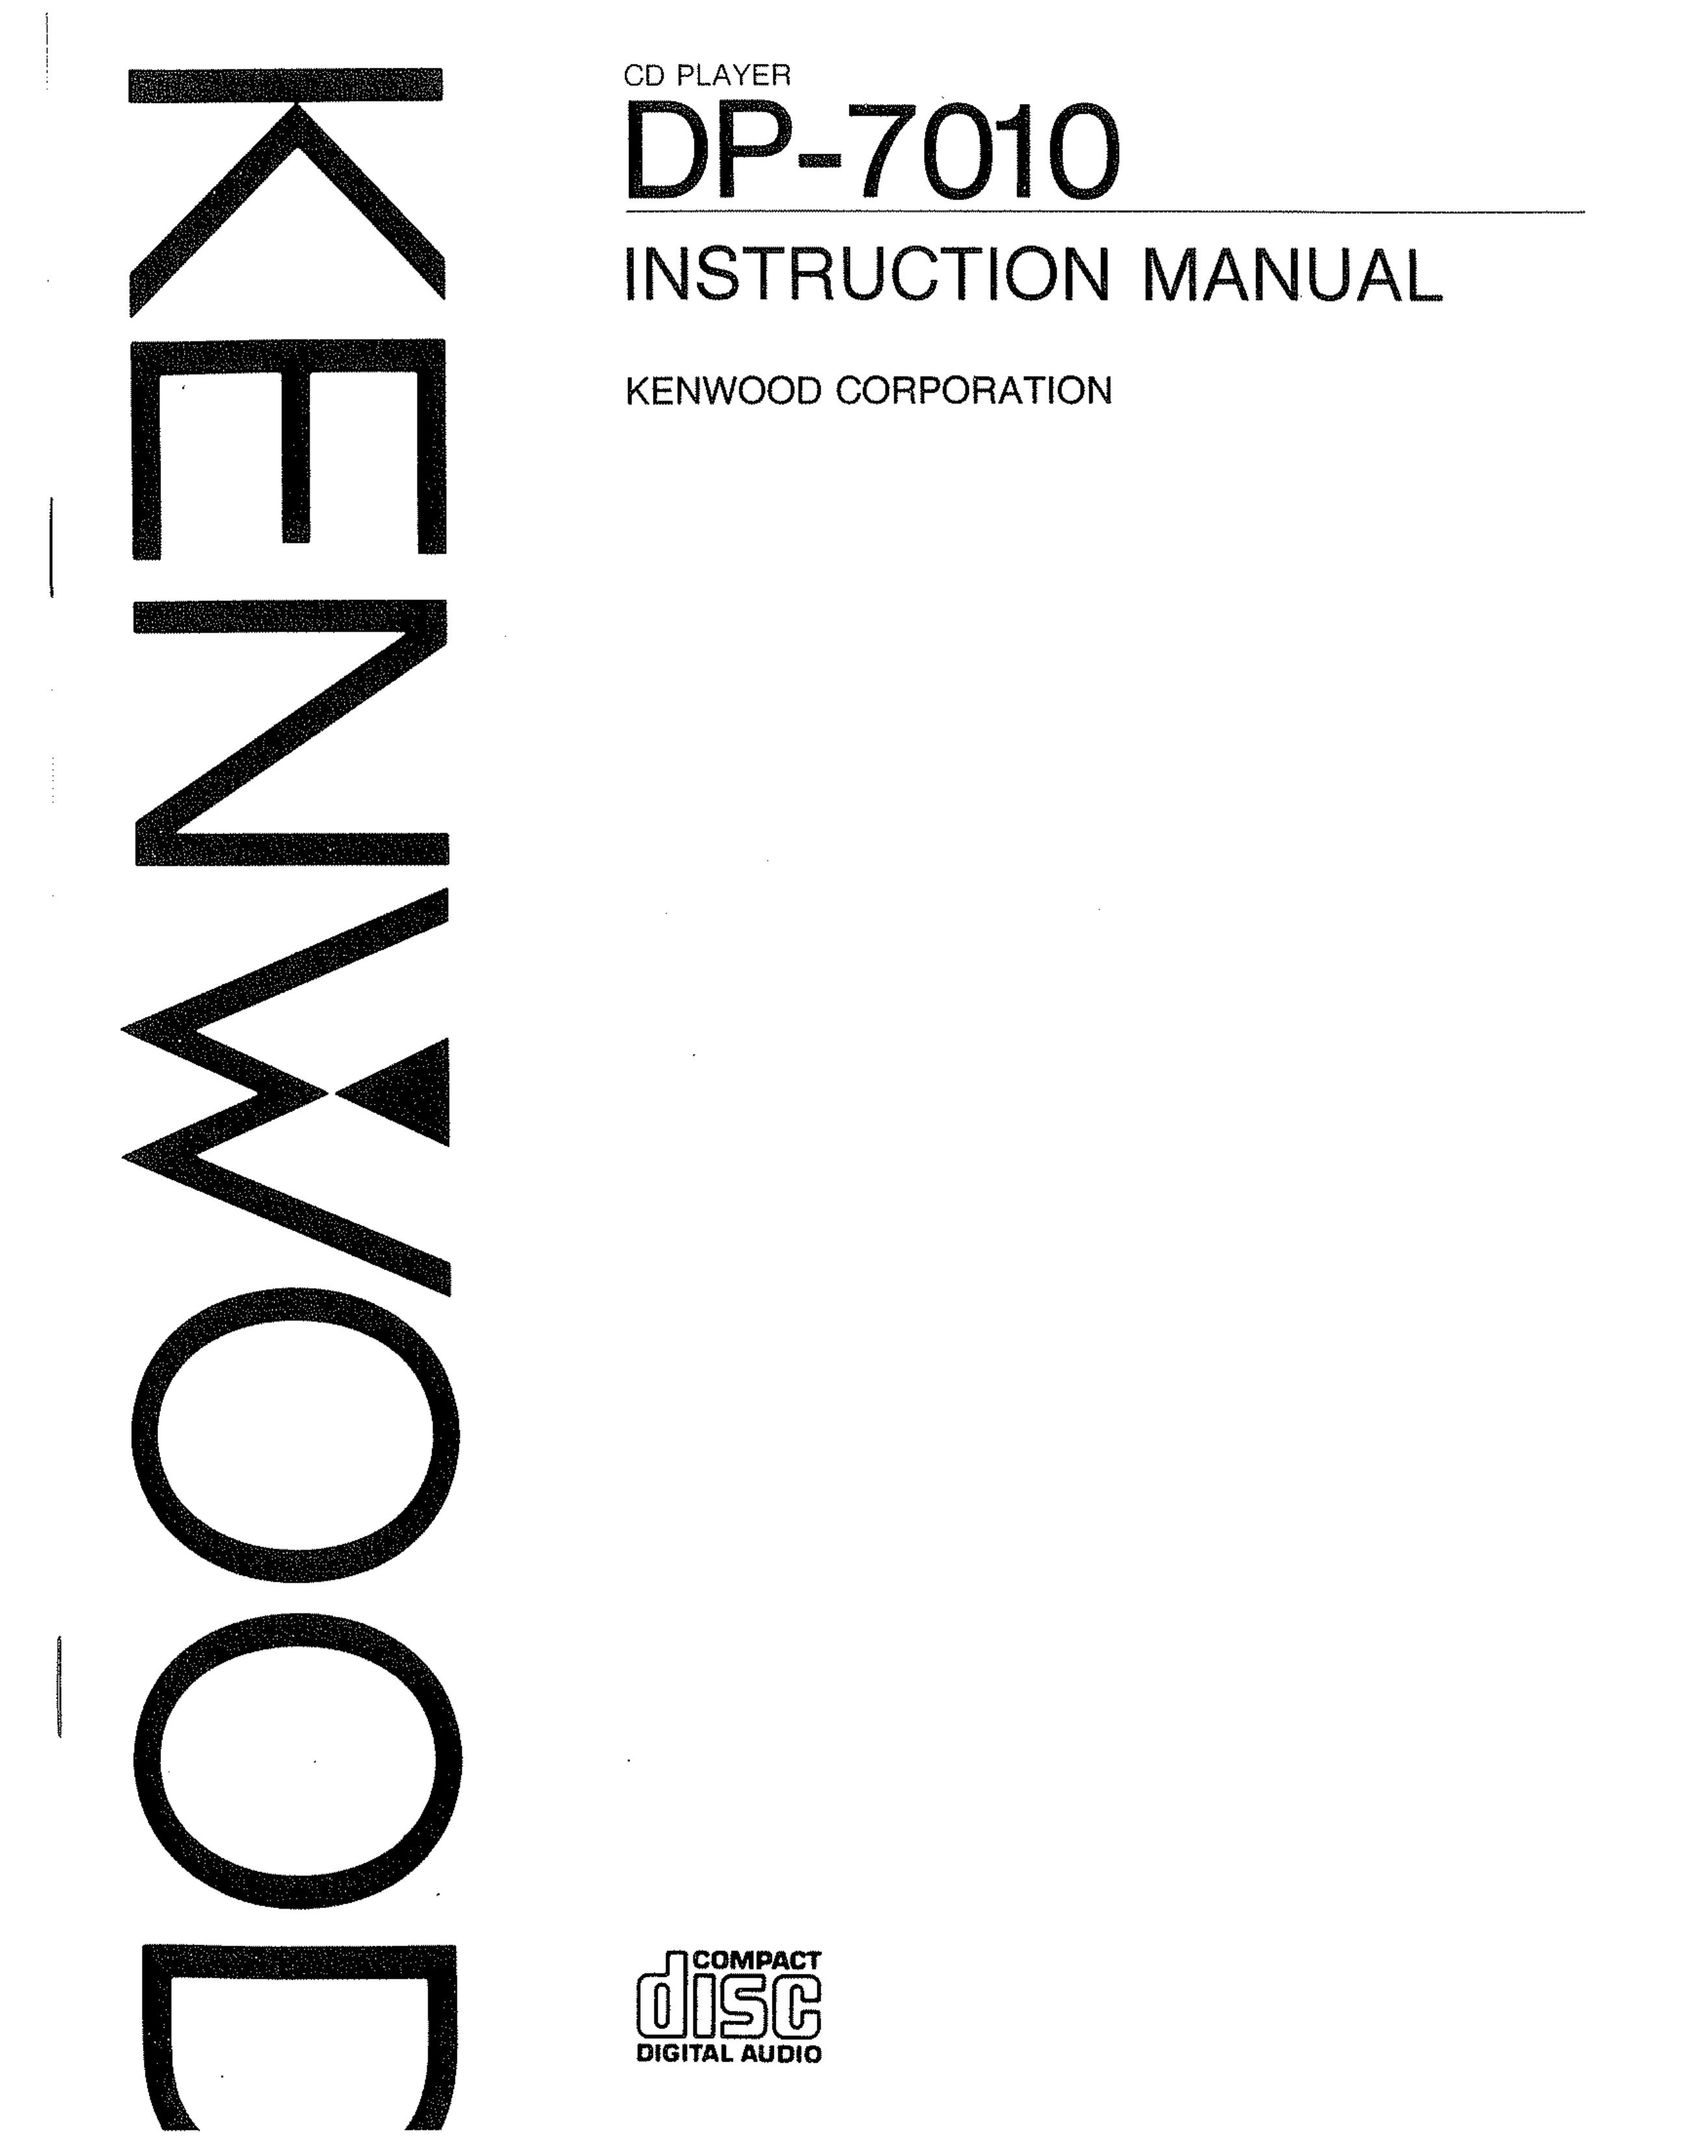 Kenwood DP-7010 CD Player User Manual